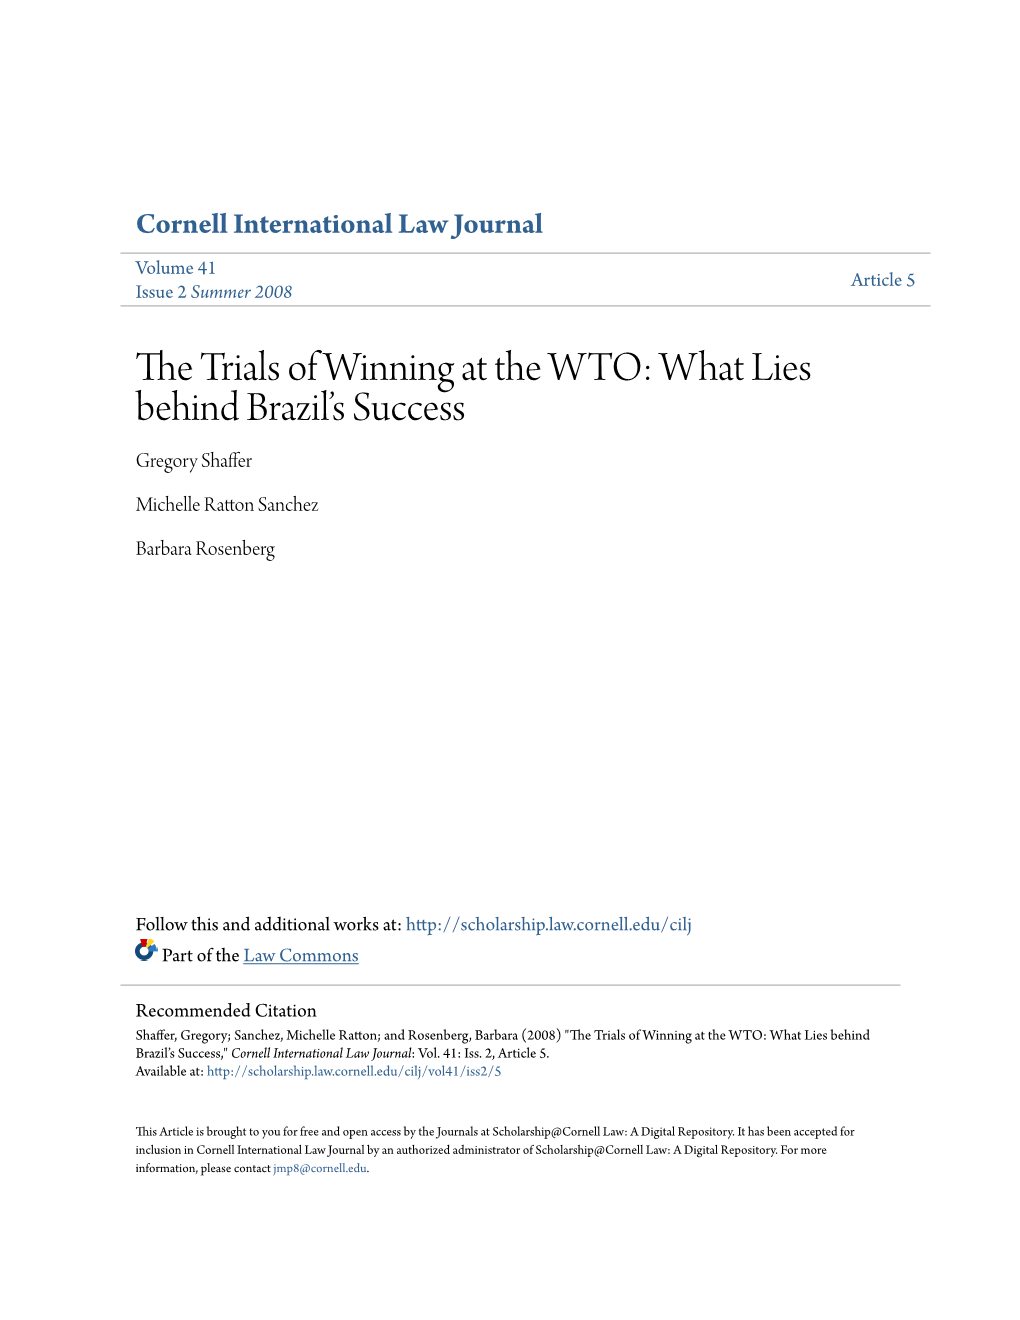 The Trials of Winning at the WTO: What Lies Behind Brazil's Success Gregory Shaffert Michelle Ratton Sanchez,Tt and Barbara Rosenbergtt